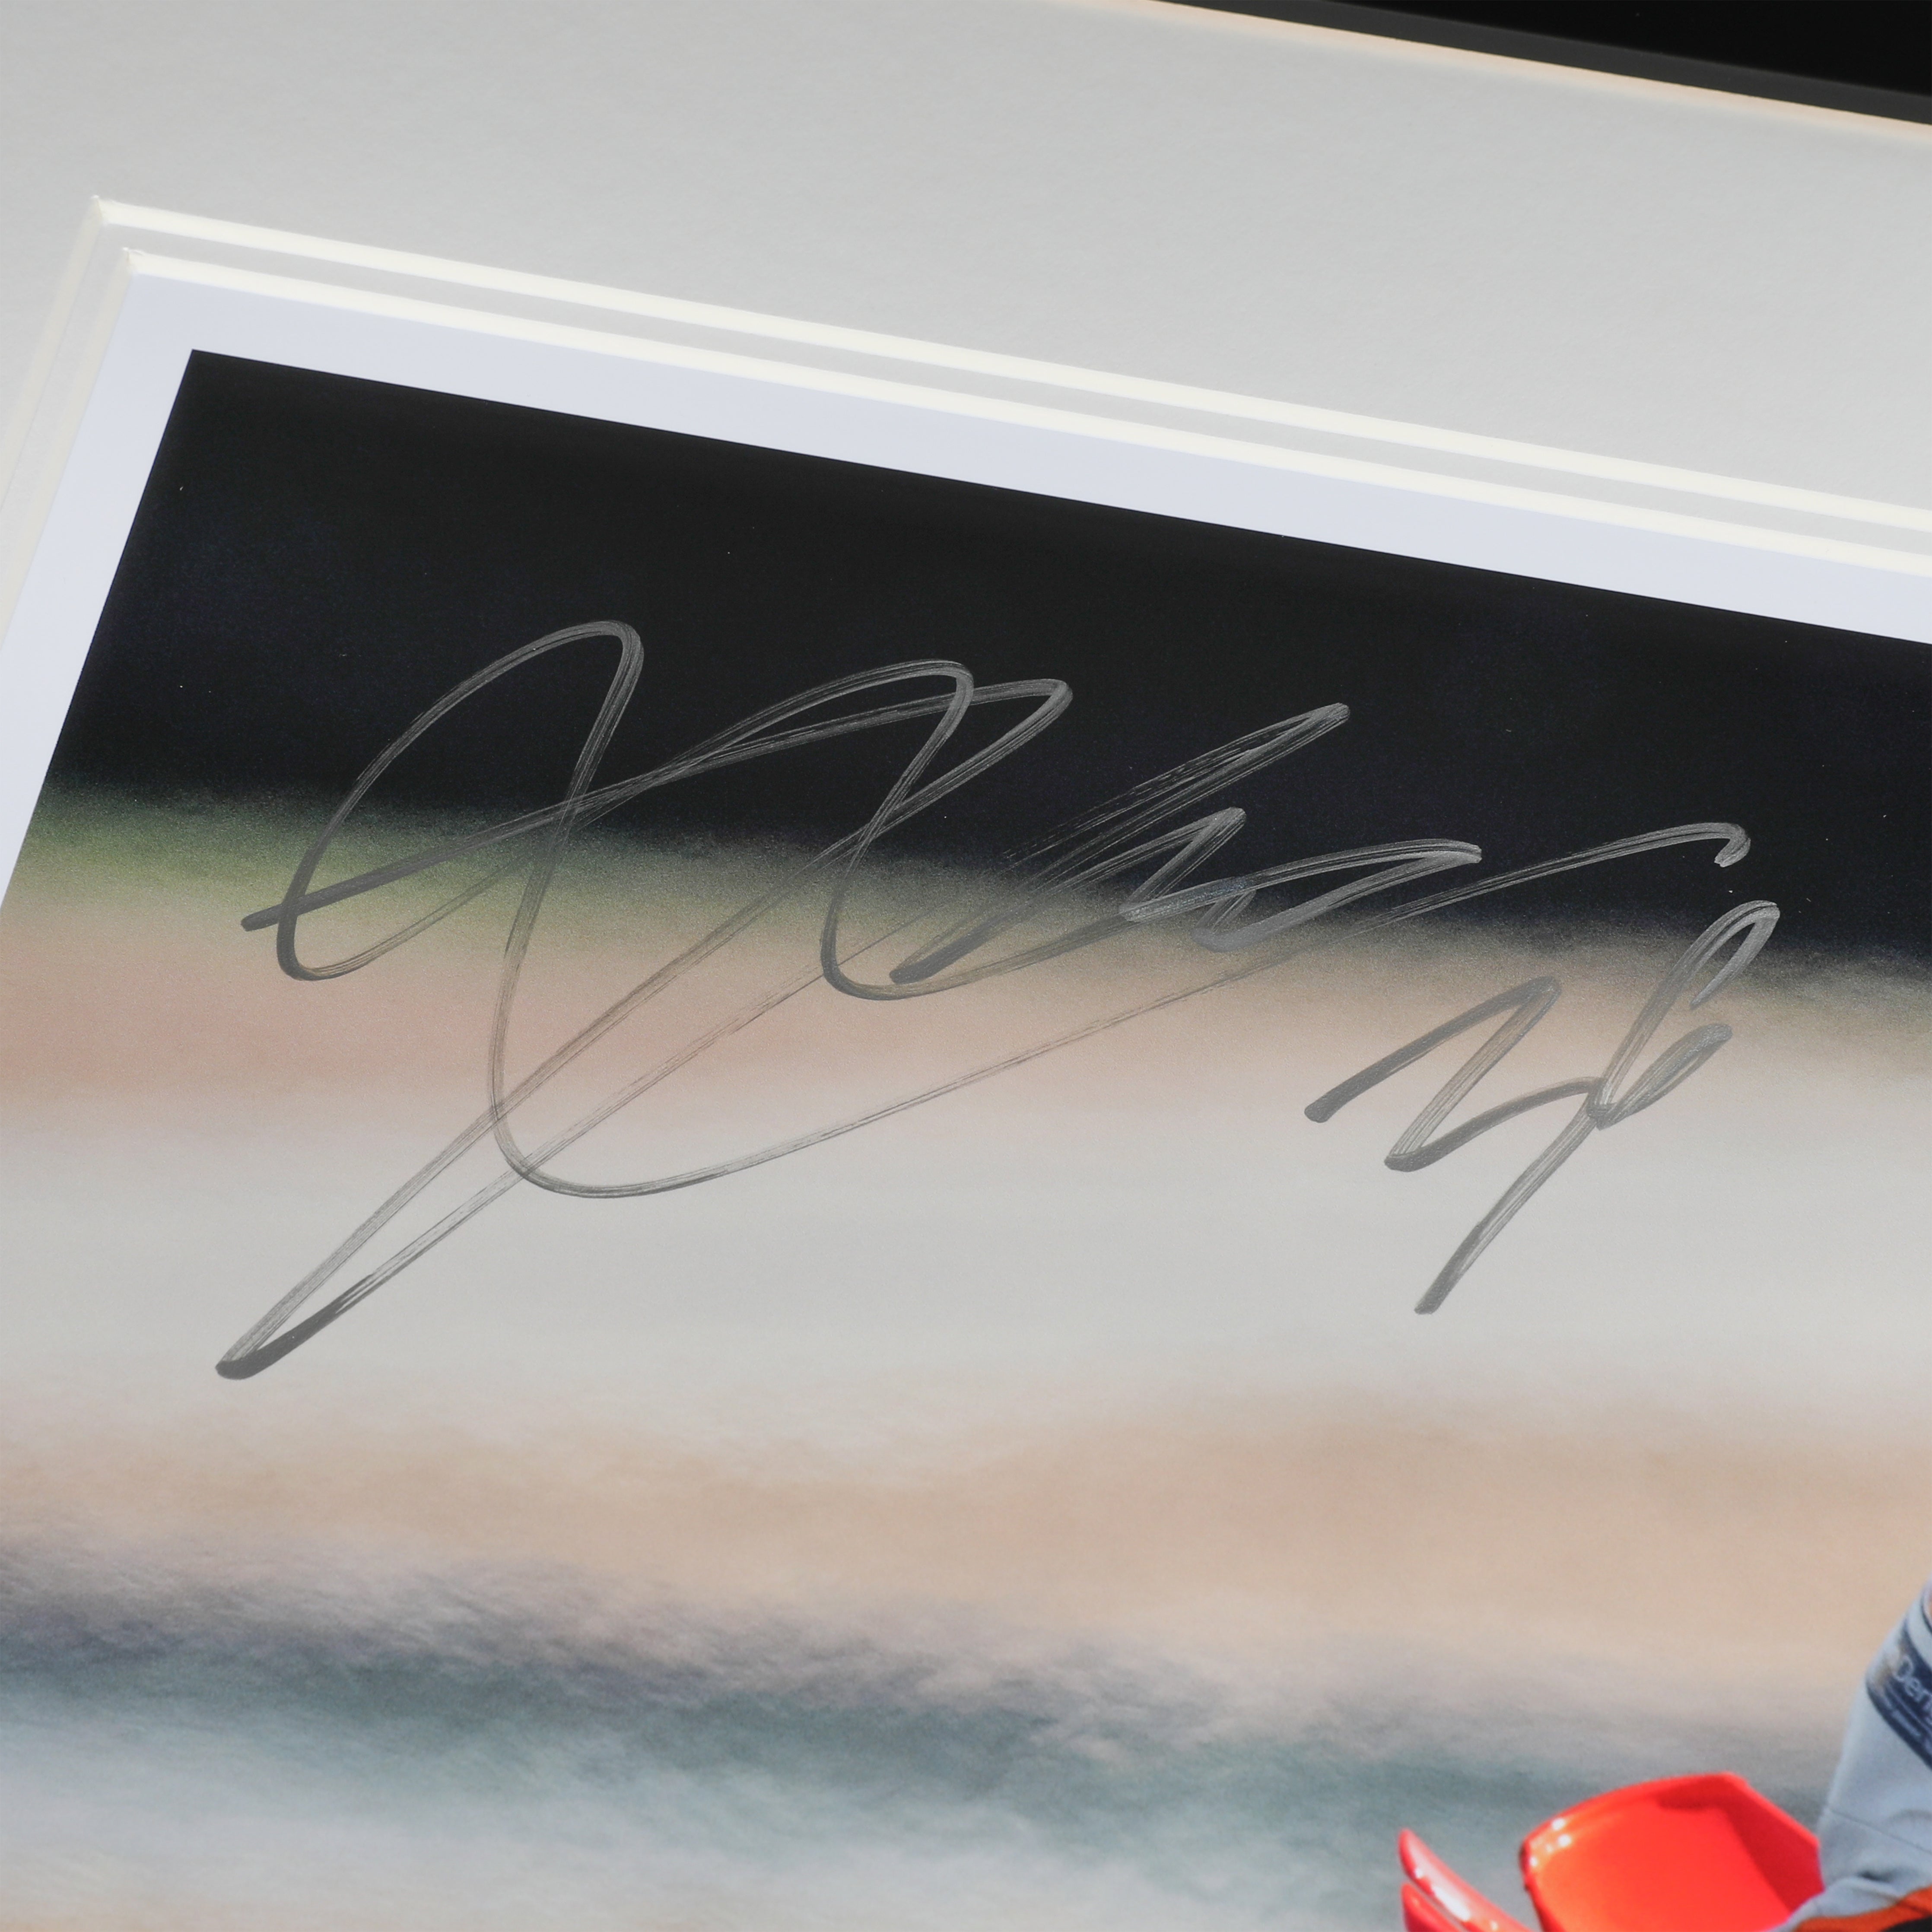 Joan Mir Signed 2023 Repsol Honda Photo - Thailand Grand Prix